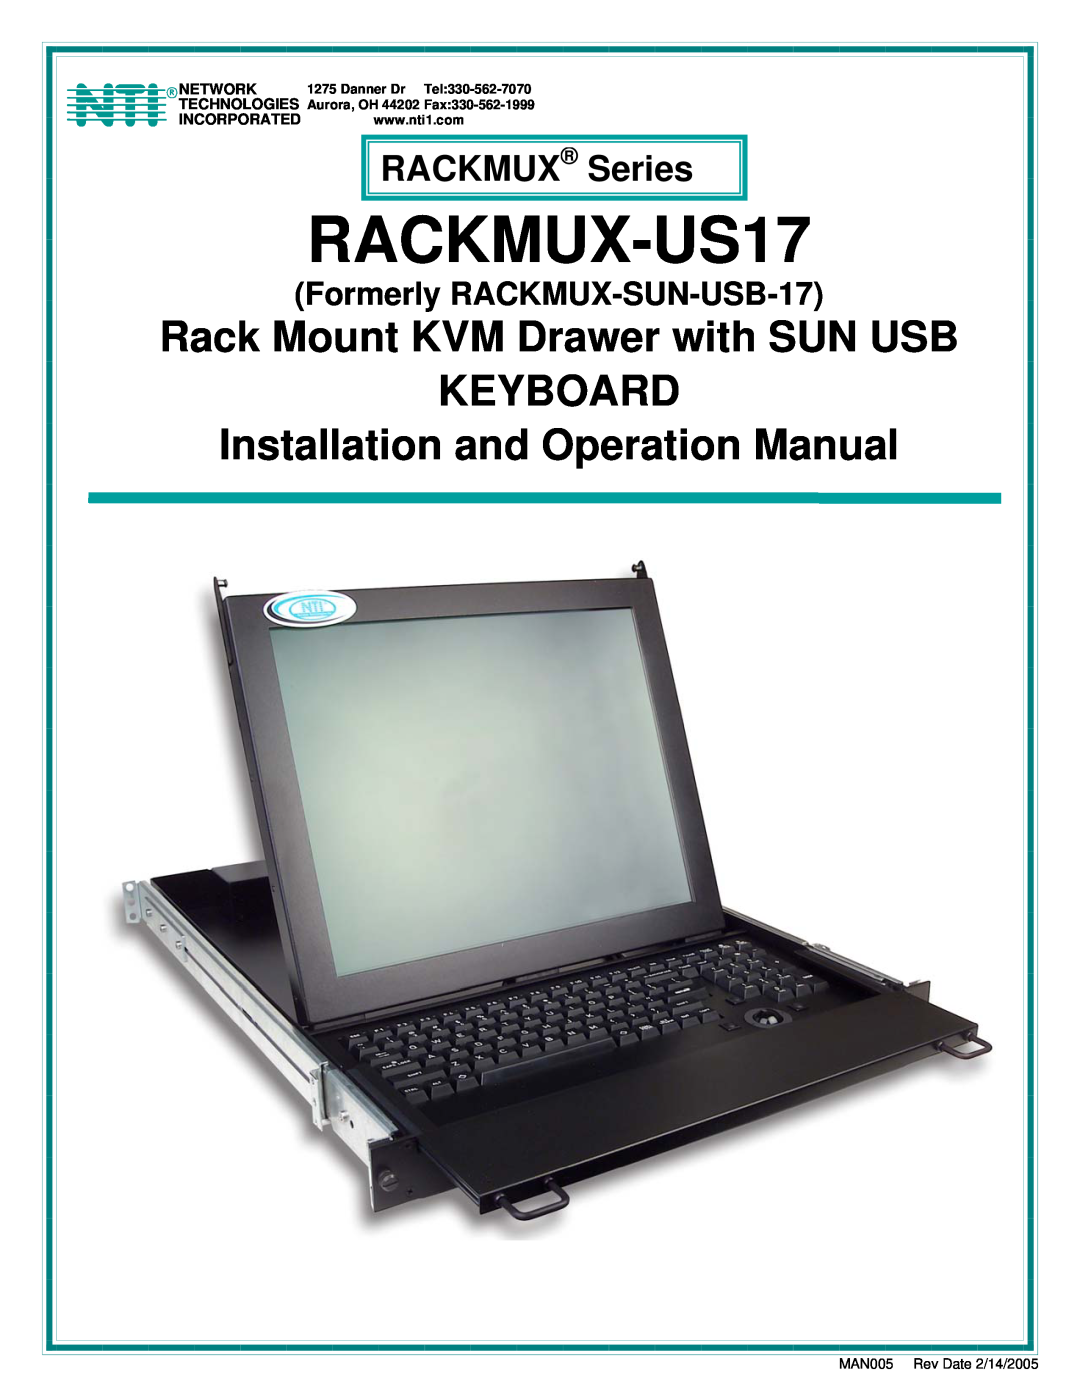 Network Technologies 2907 operation manual RACKMUX-US17, Rack Mount KVM Drawer with SUN USB, Keyboard, RACKMUX Series 